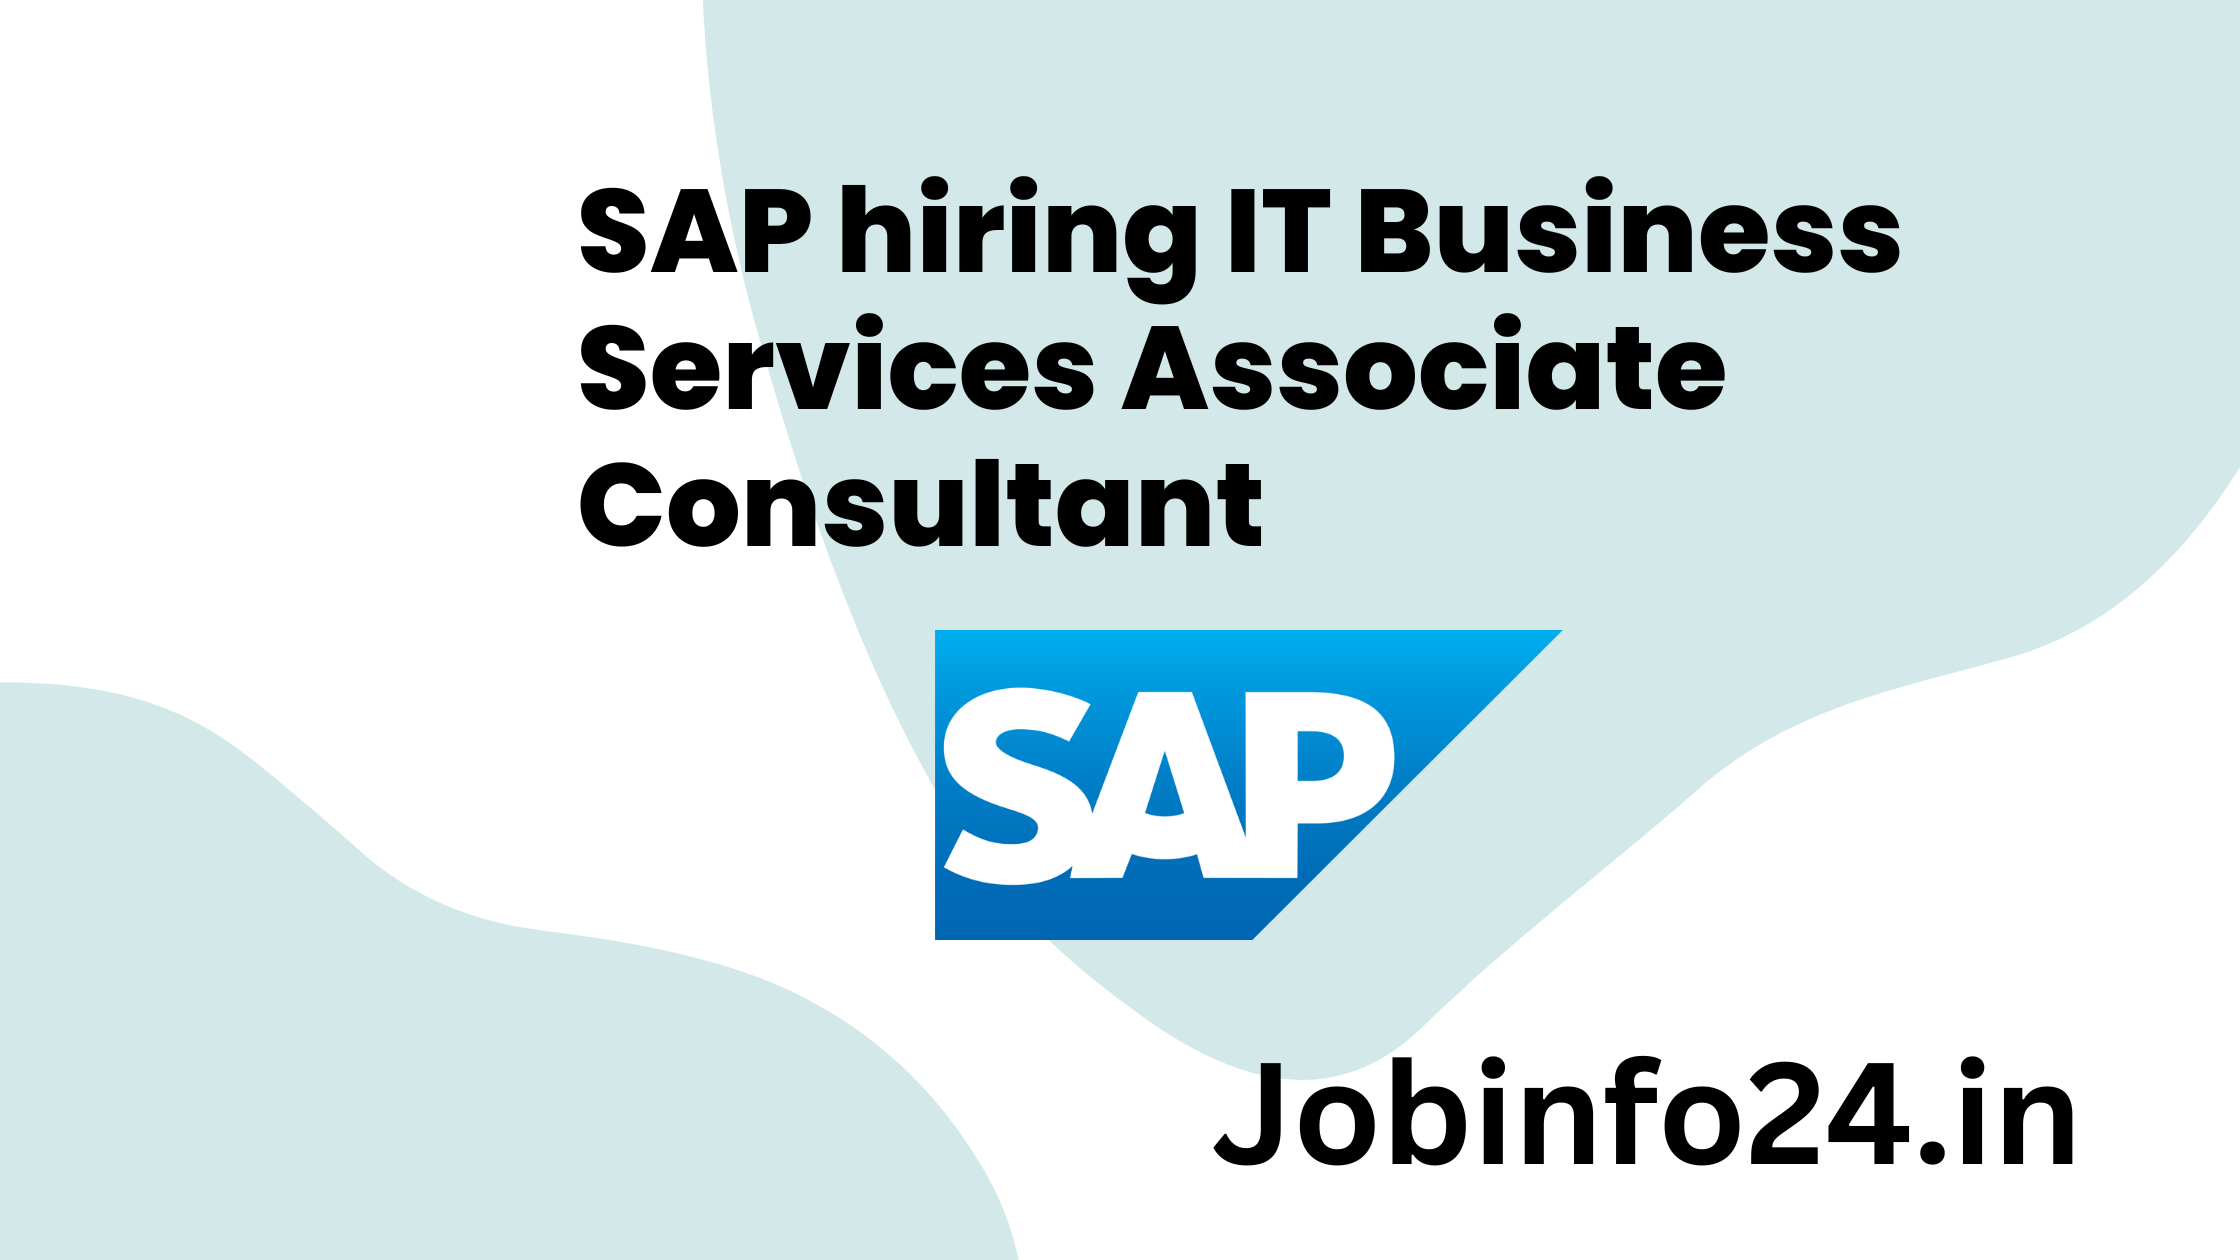 SAP hiring IT Business Services Associate Consultant